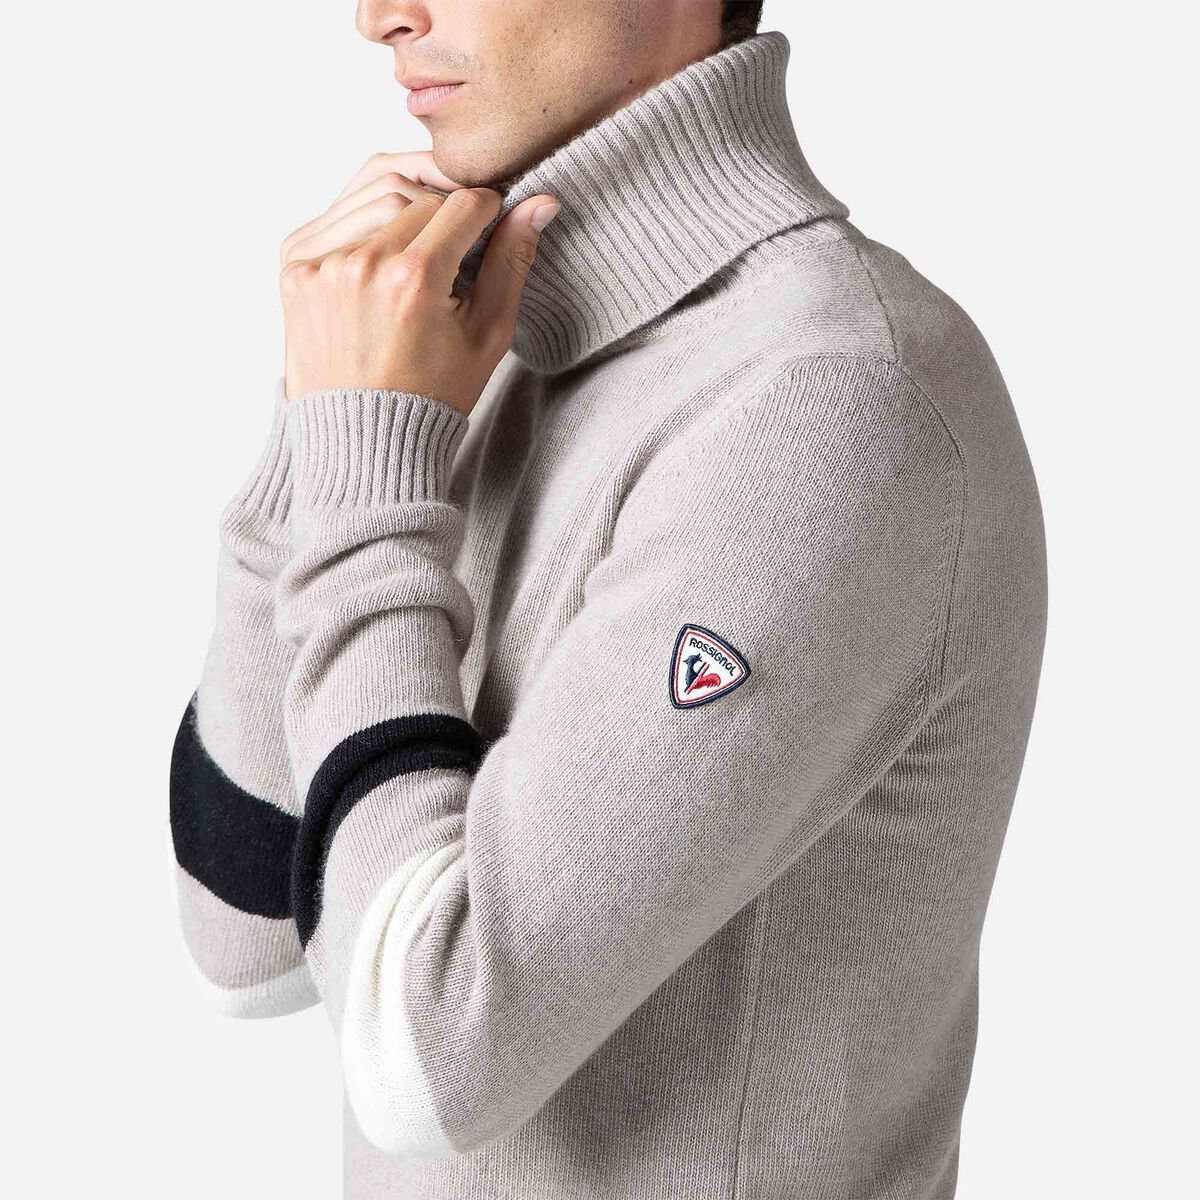 Rossignol Men's Signature Roll-Neck Sweater grey